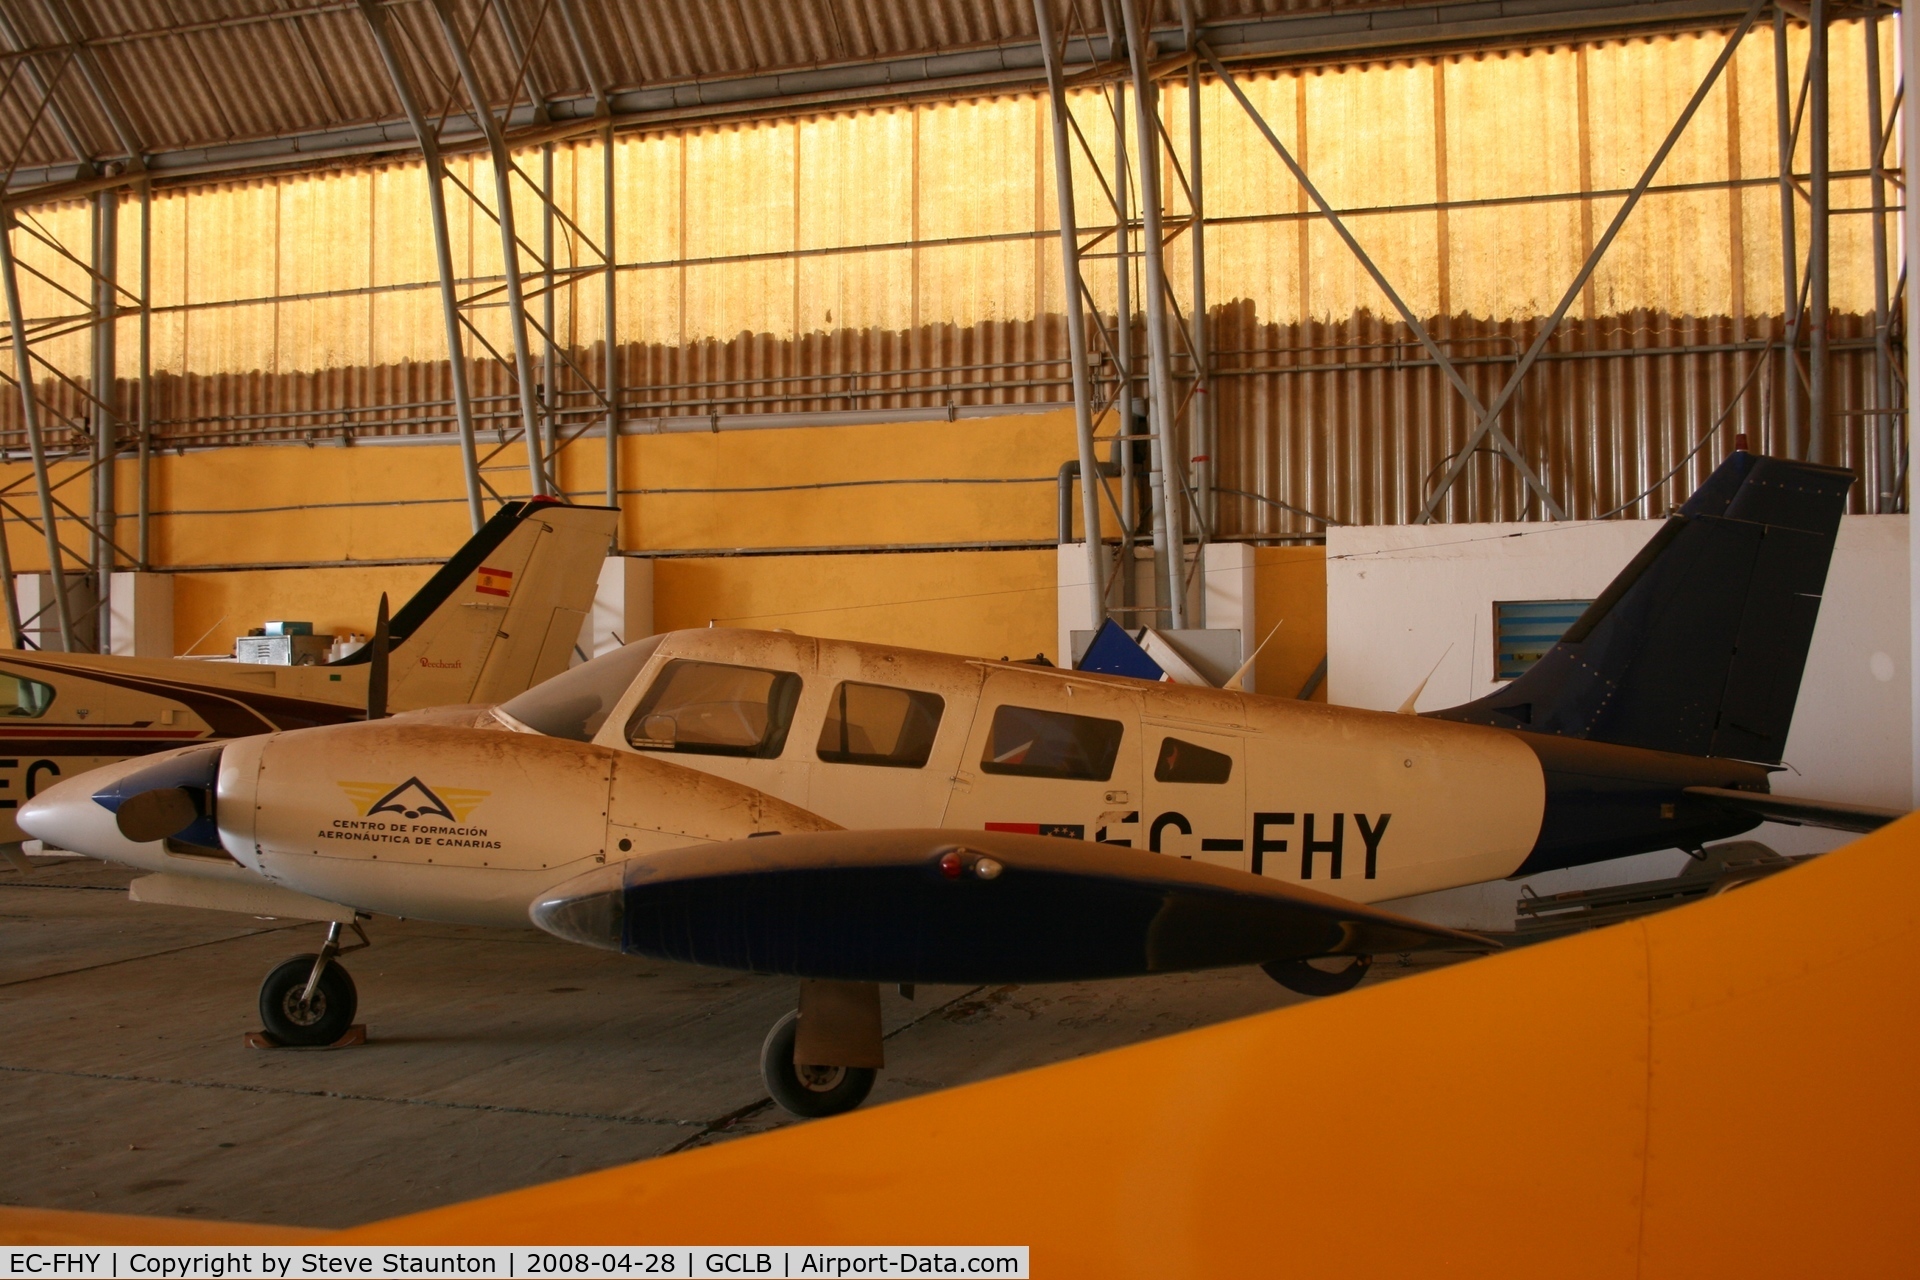 EC-FHY, 1978 Piper PA-34-200T Seneca II C/N 34-7870184, Taken at El Berriel, Gran Canaria.